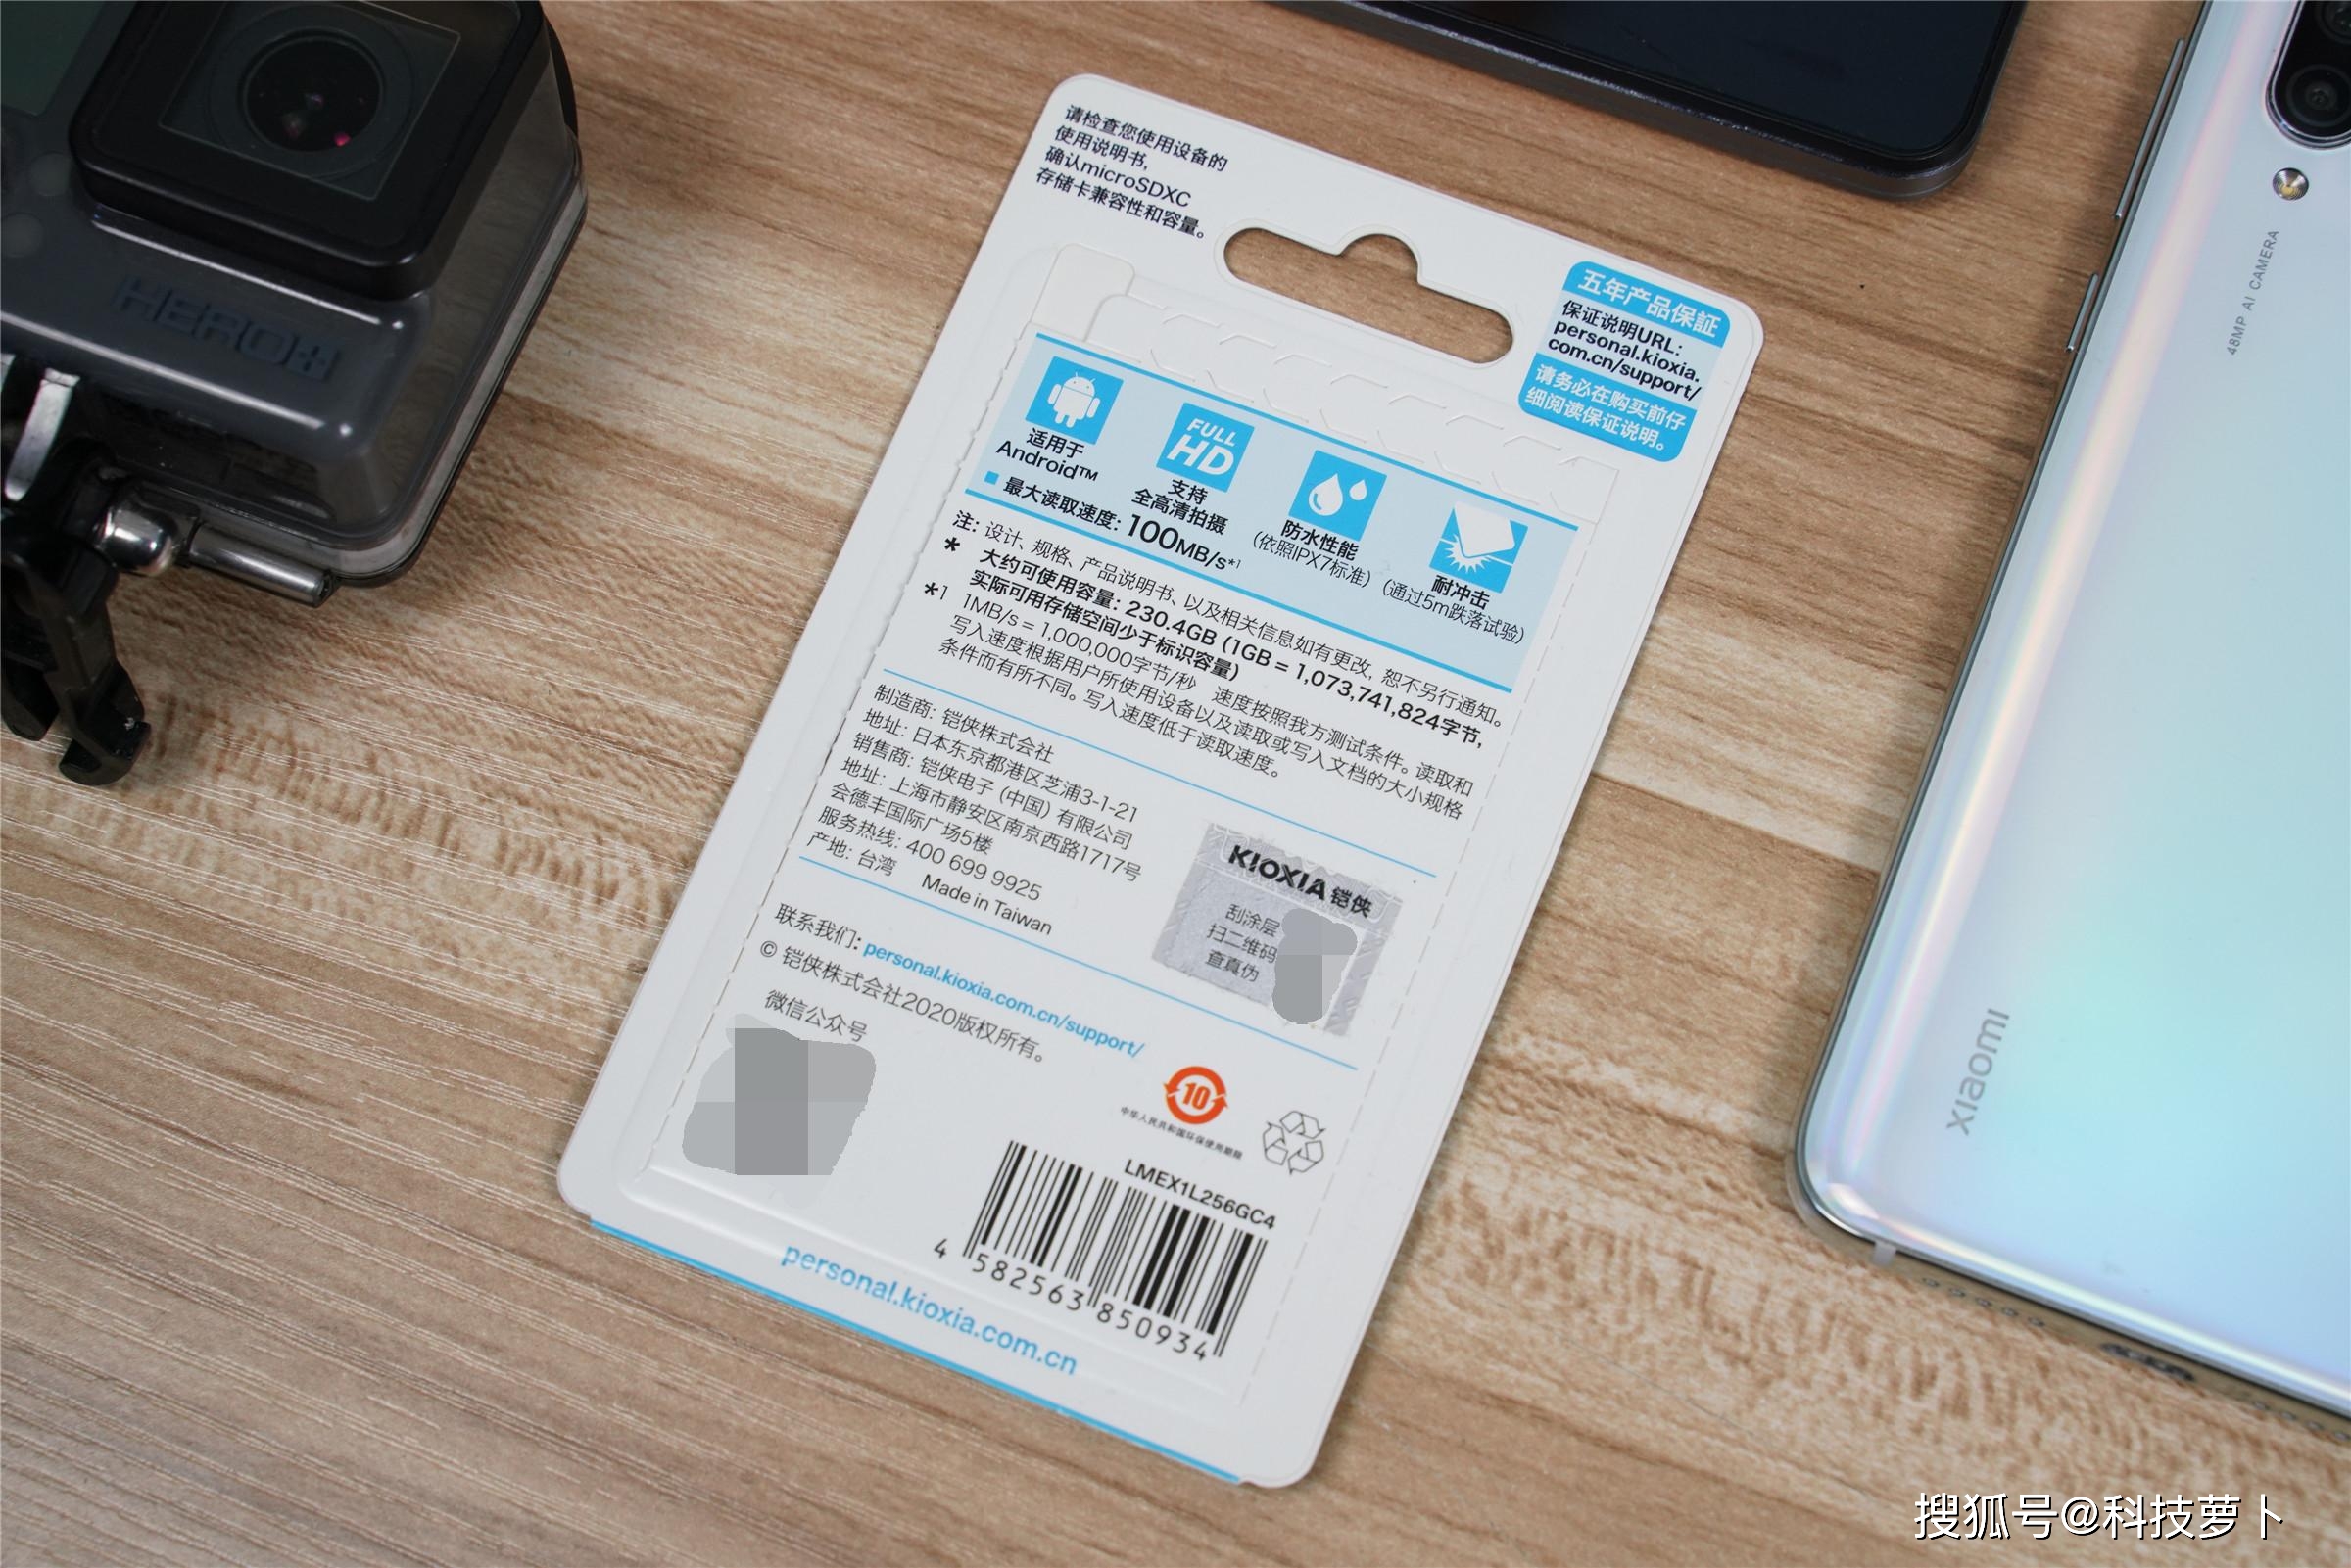 MicroSD卡 是什么?是内存卡吗？用普通的读卡器可以吗